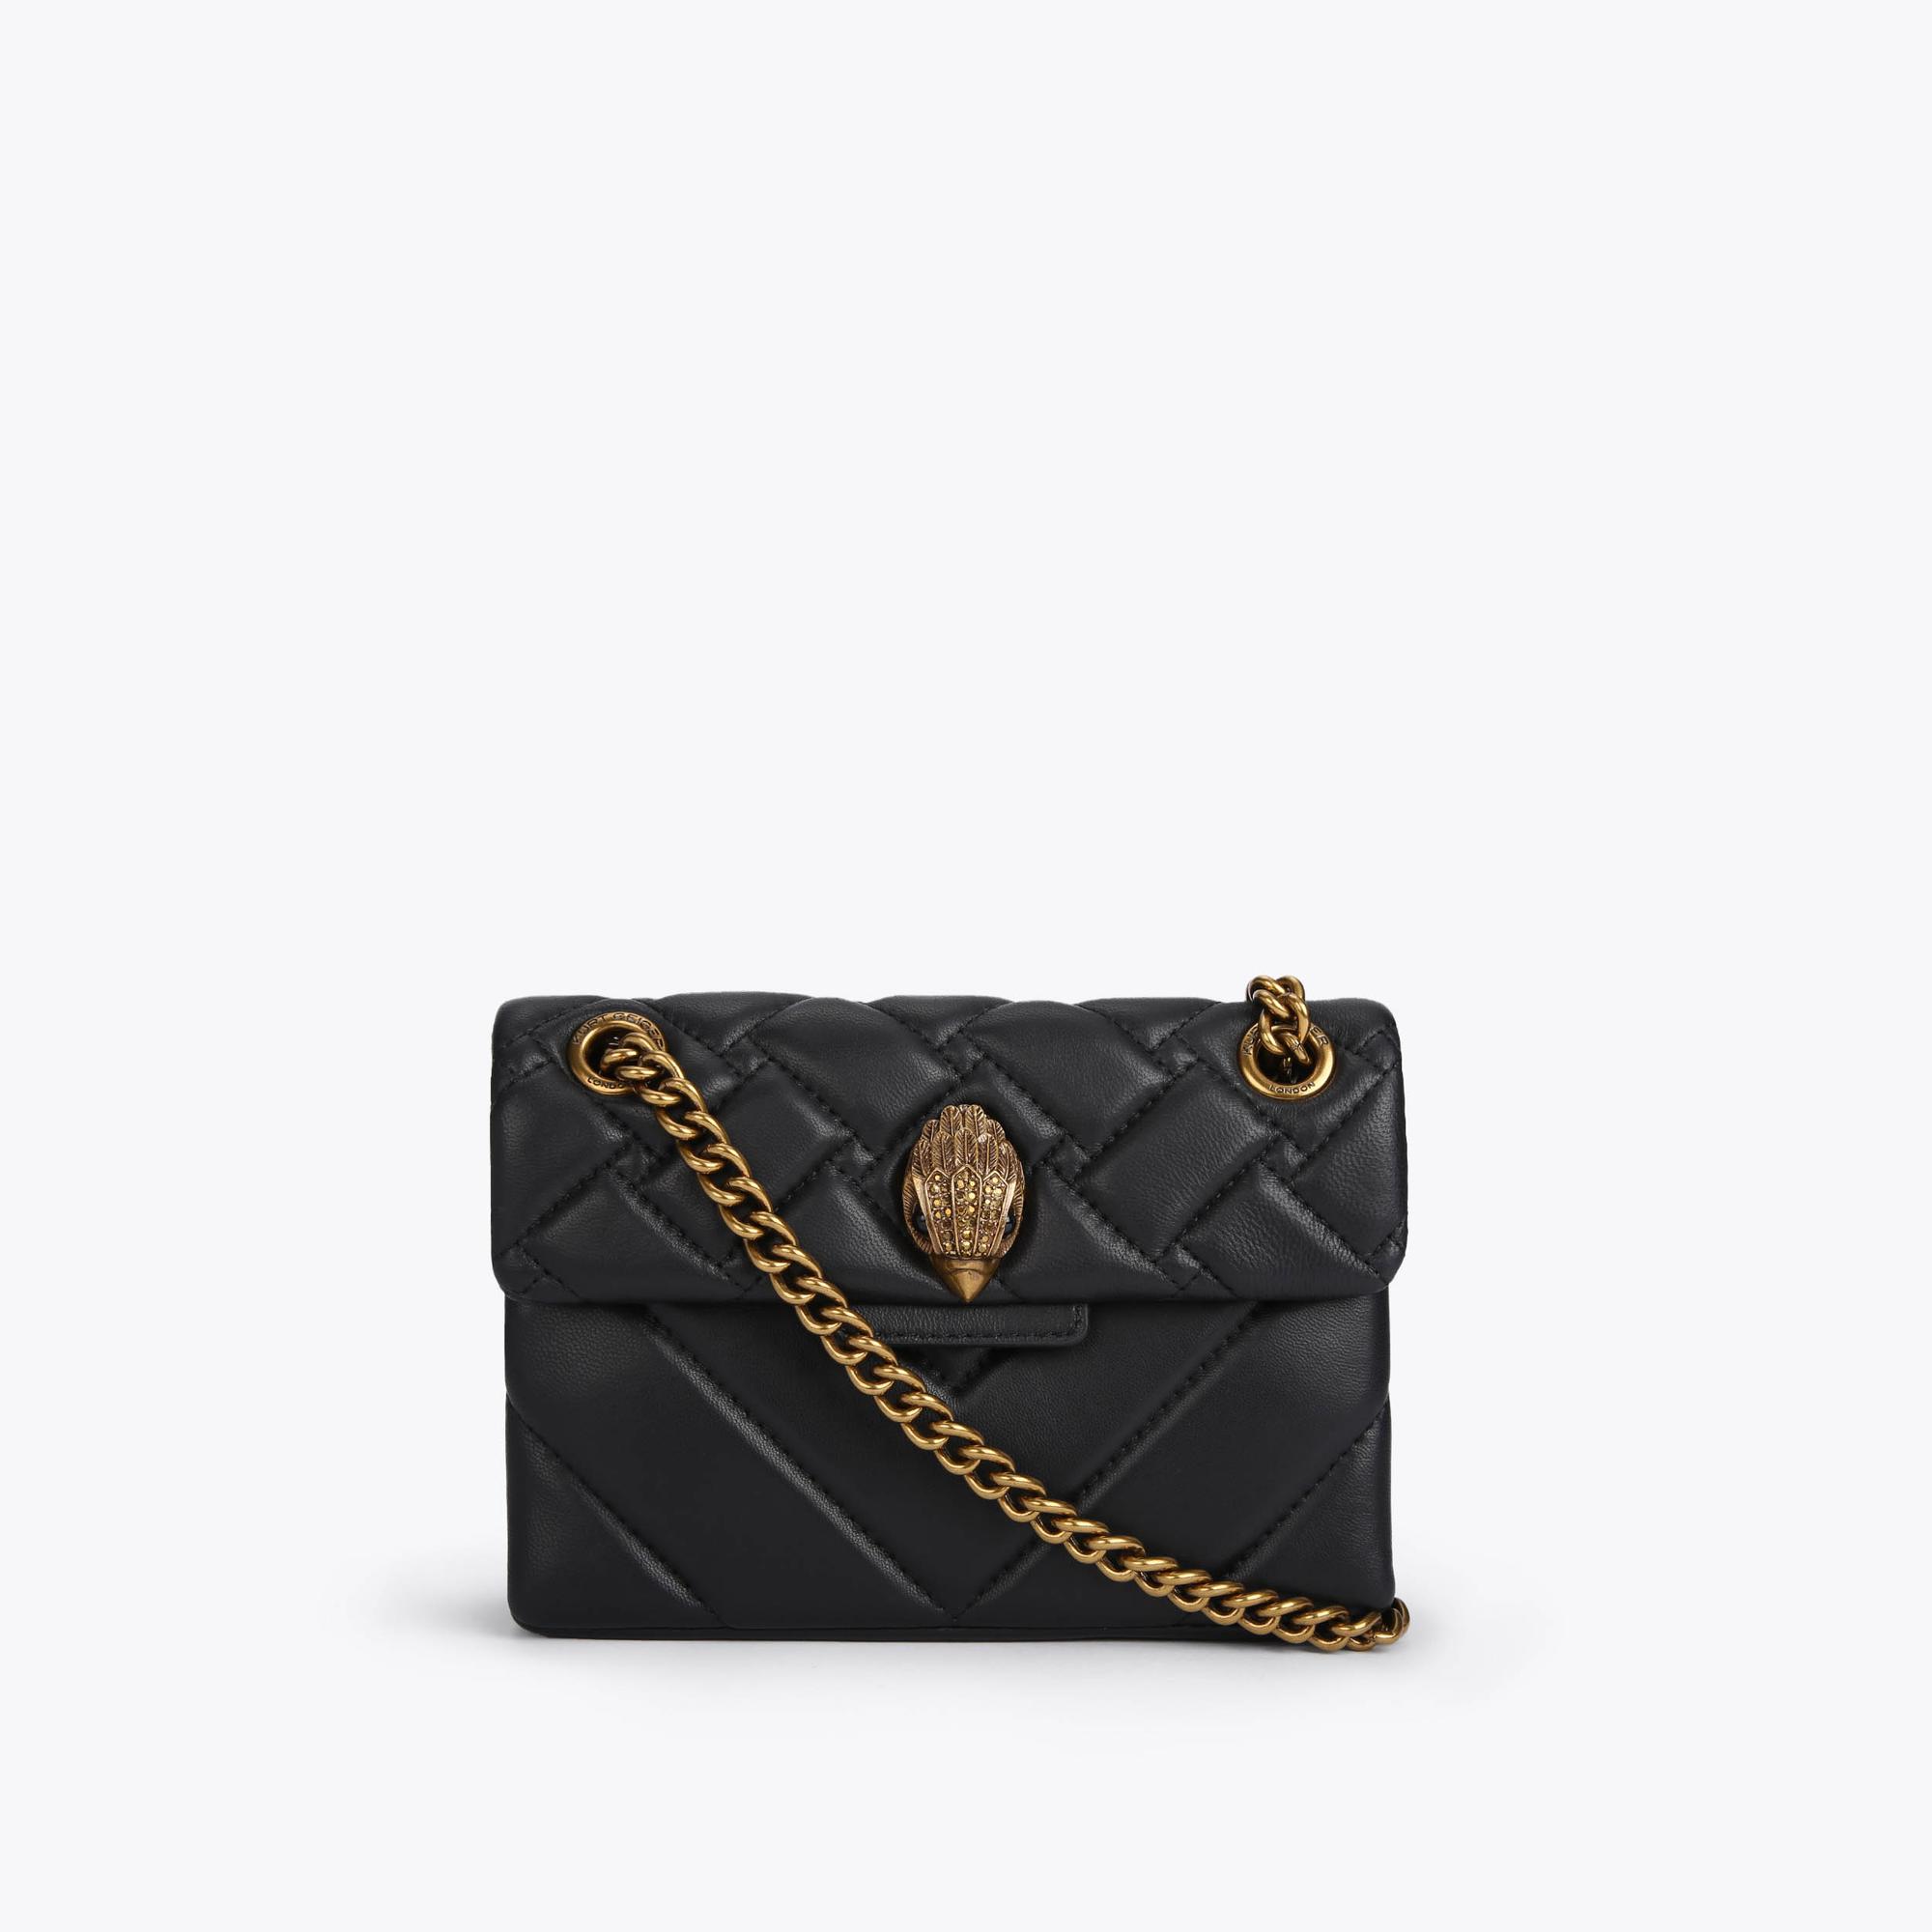 MINI KENSINGTON X BAG Black Quilted Leather Mini Bag by KURT GEIGER LONDON